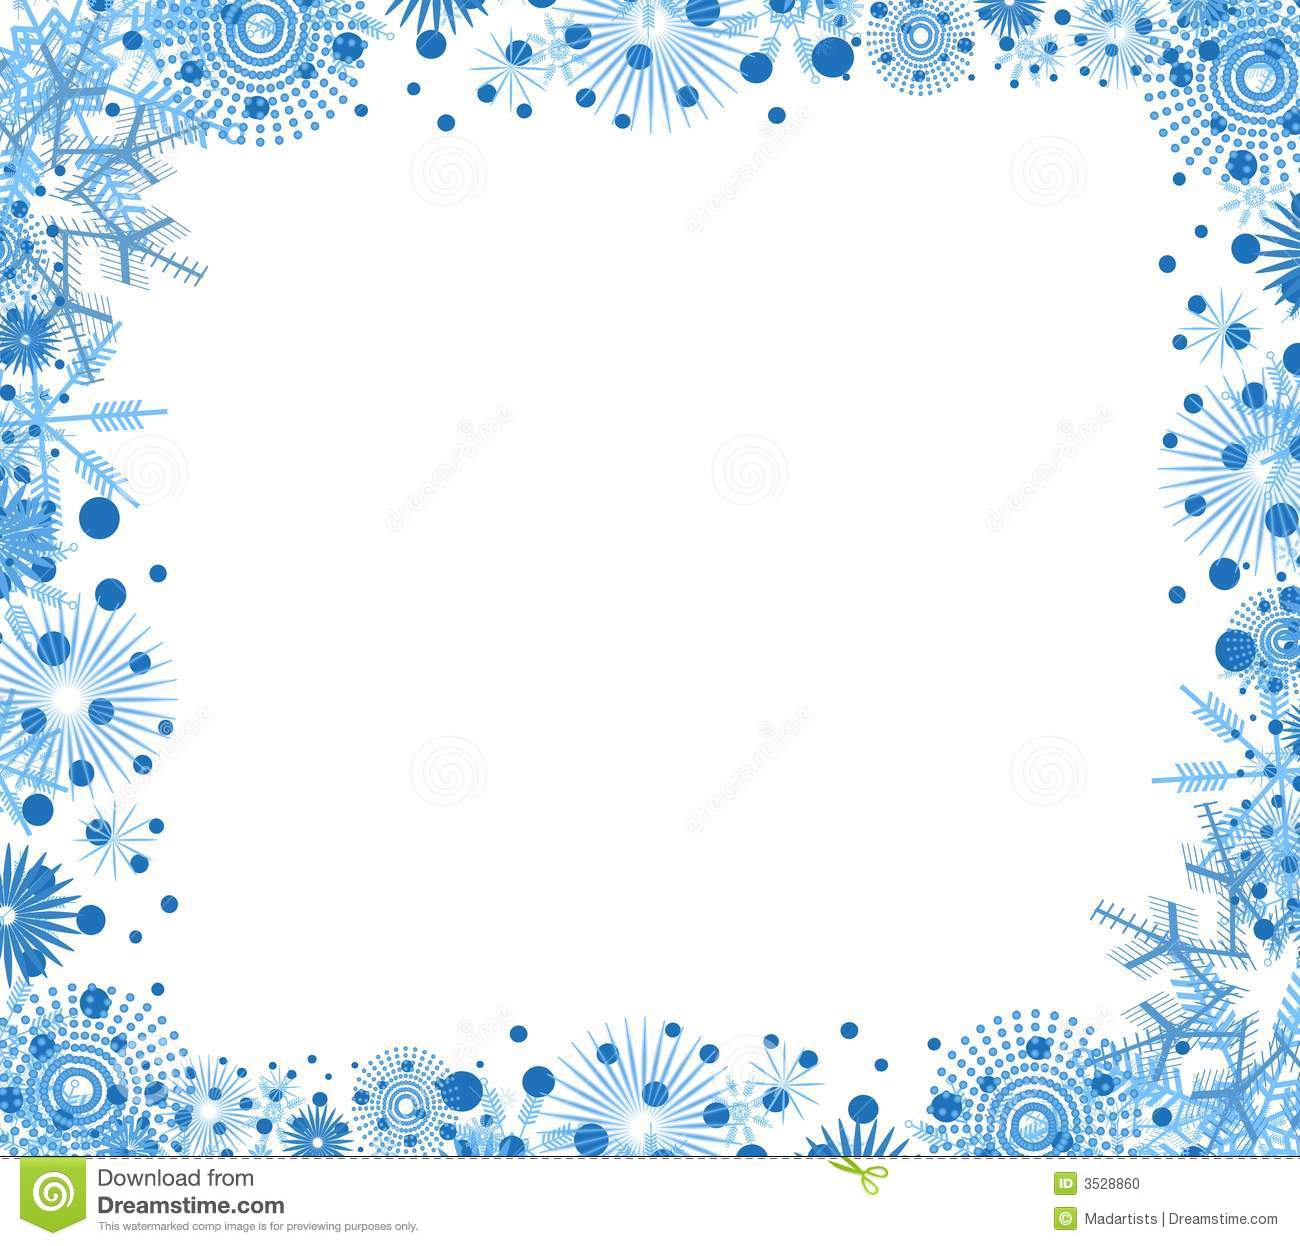 winter clipart snowflake - photo #24